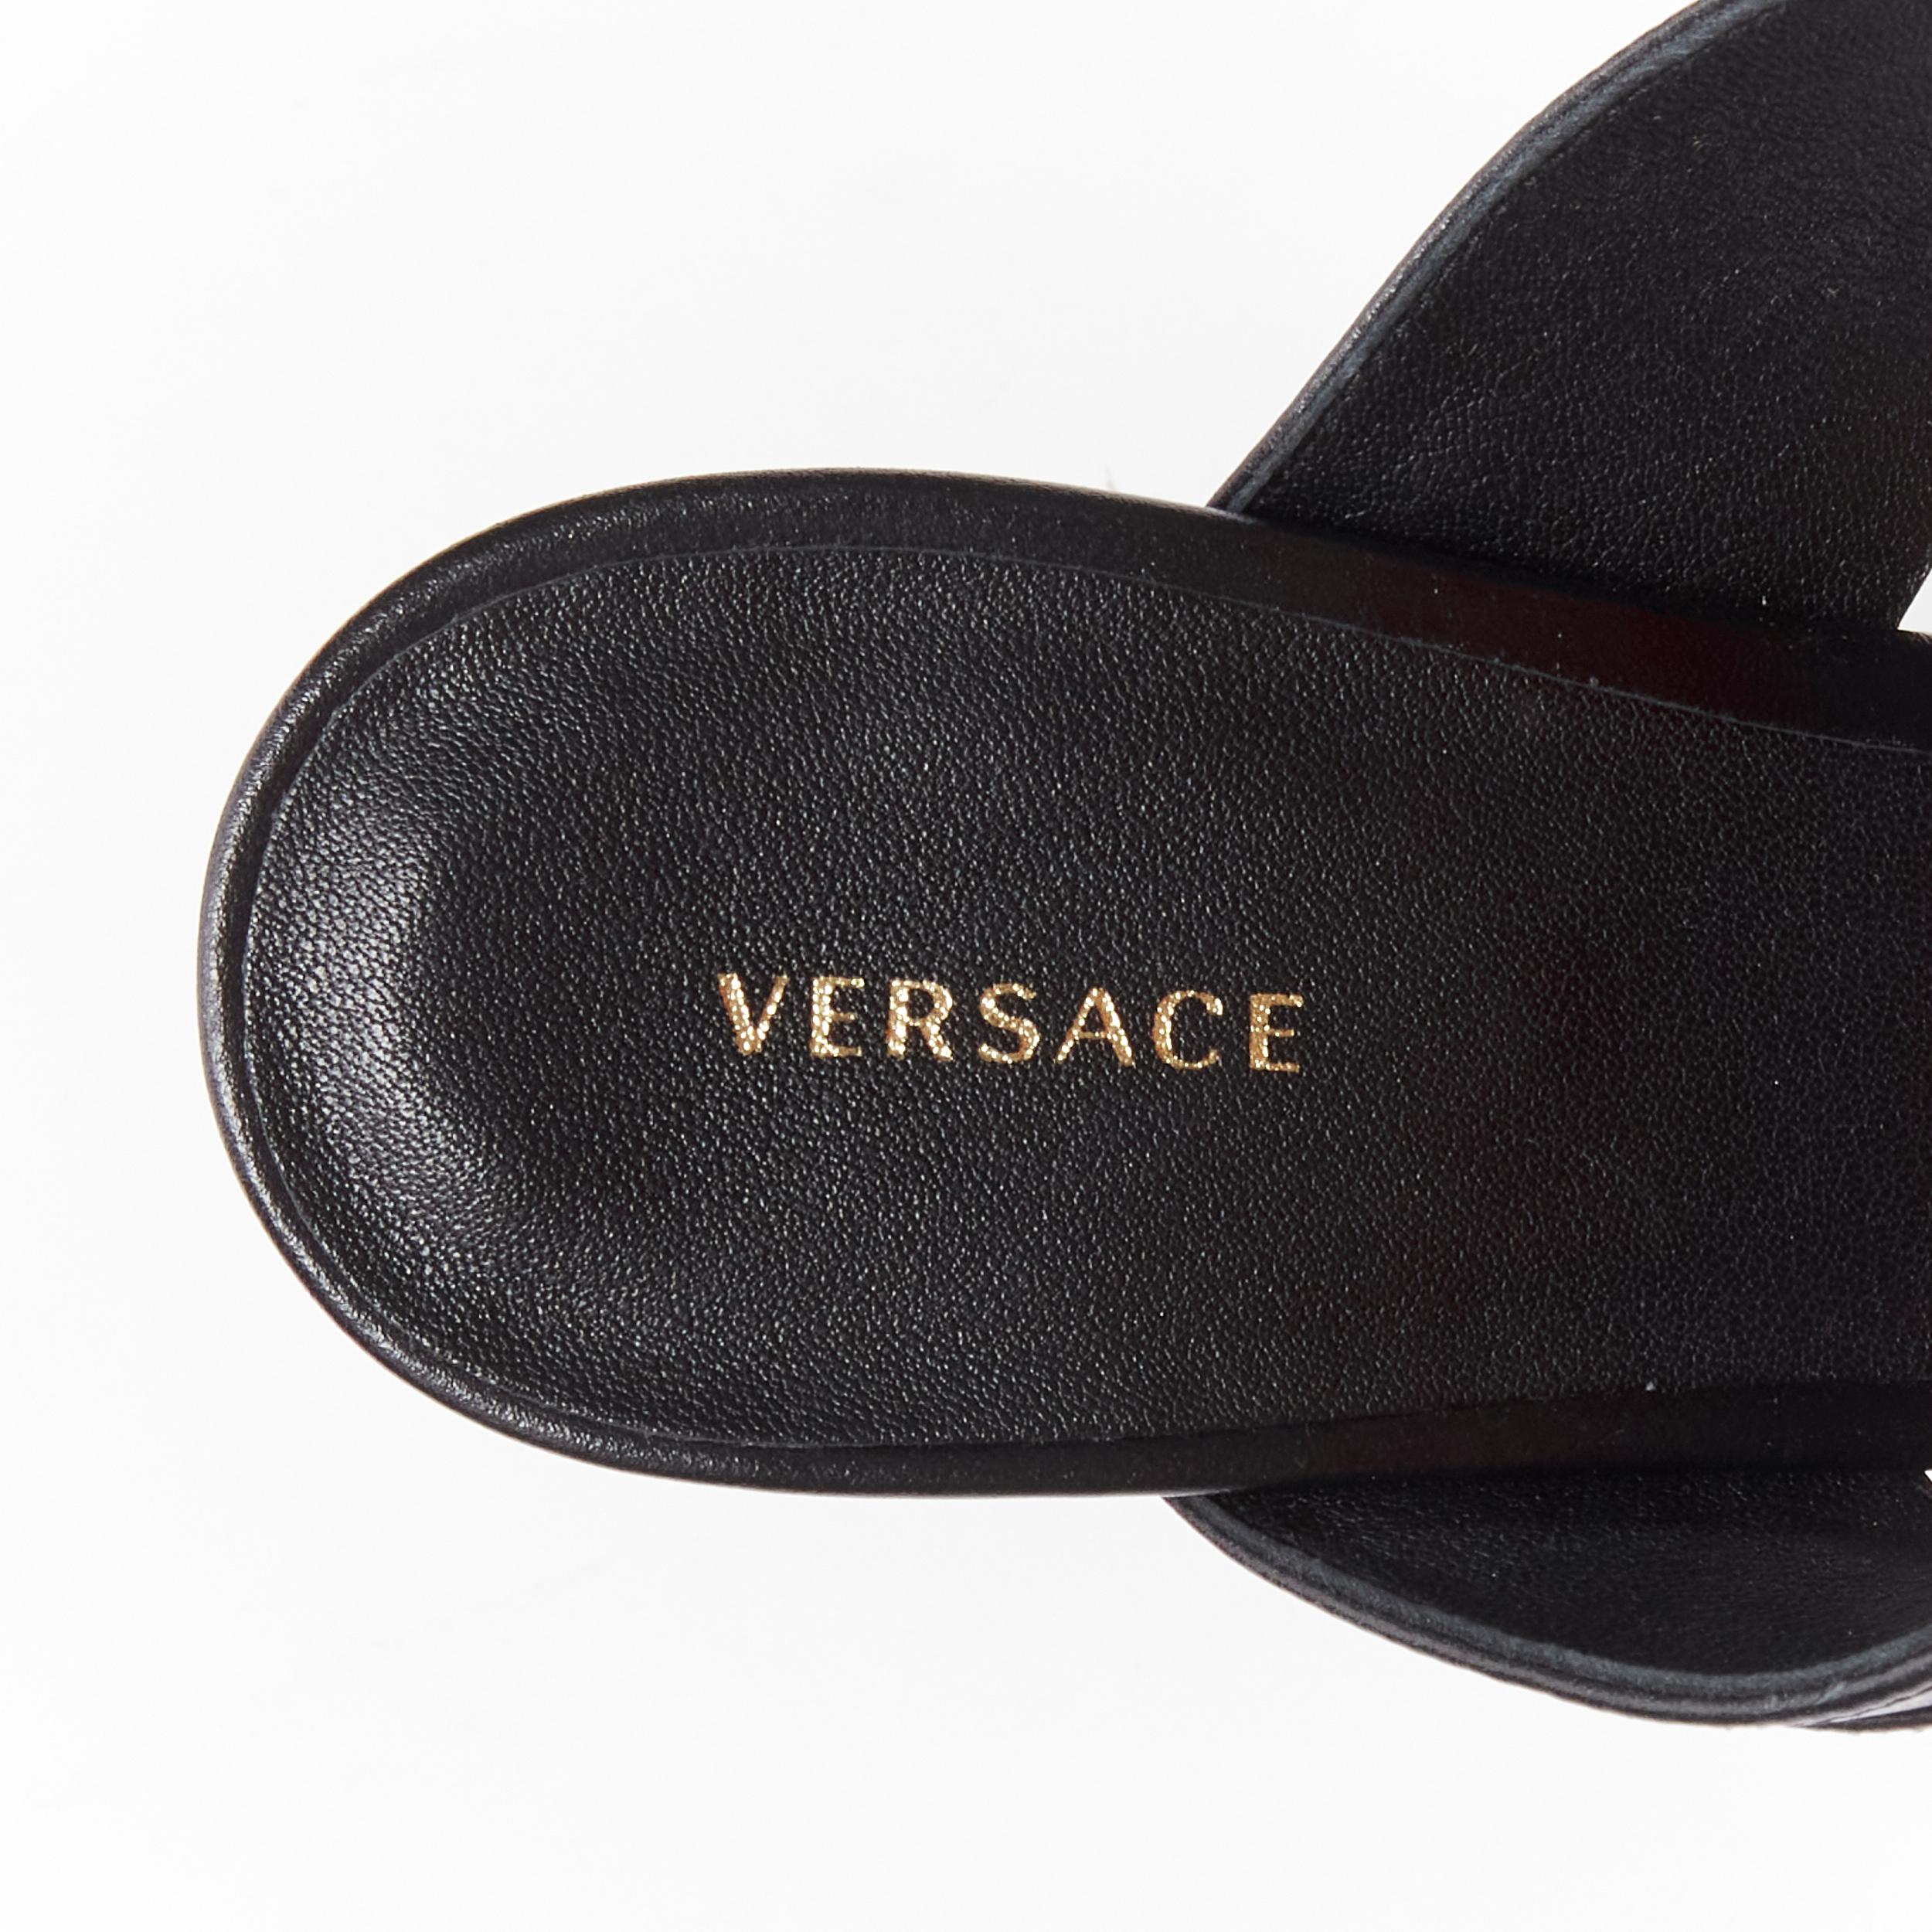 new VERSACE Medusa Tribute gold buckle black leather high heel sandal EU36 4